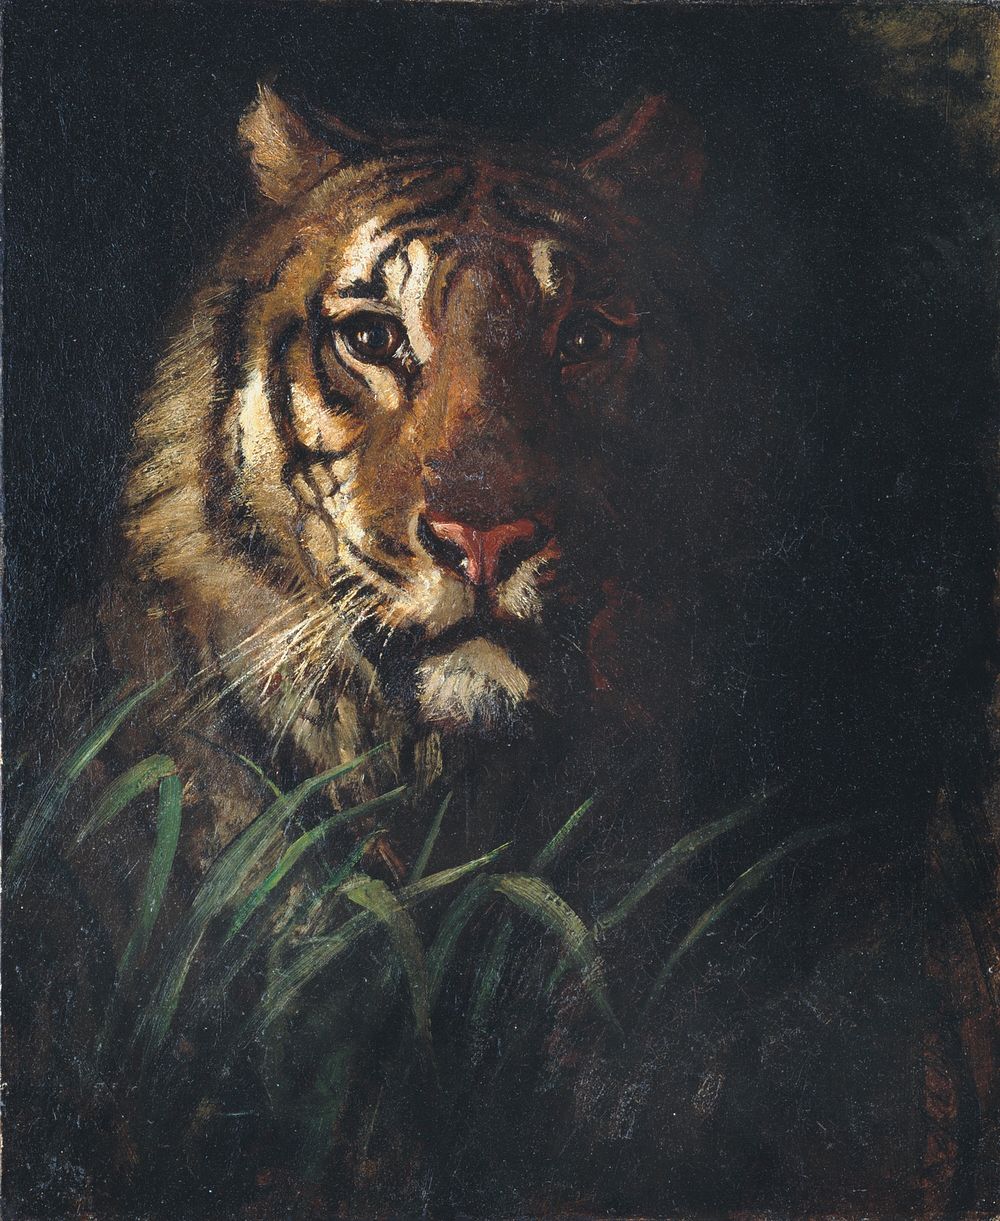 Tiger's Head painting in high resolution by Abbott Handerson Thayer (1849&ndash;1921).  